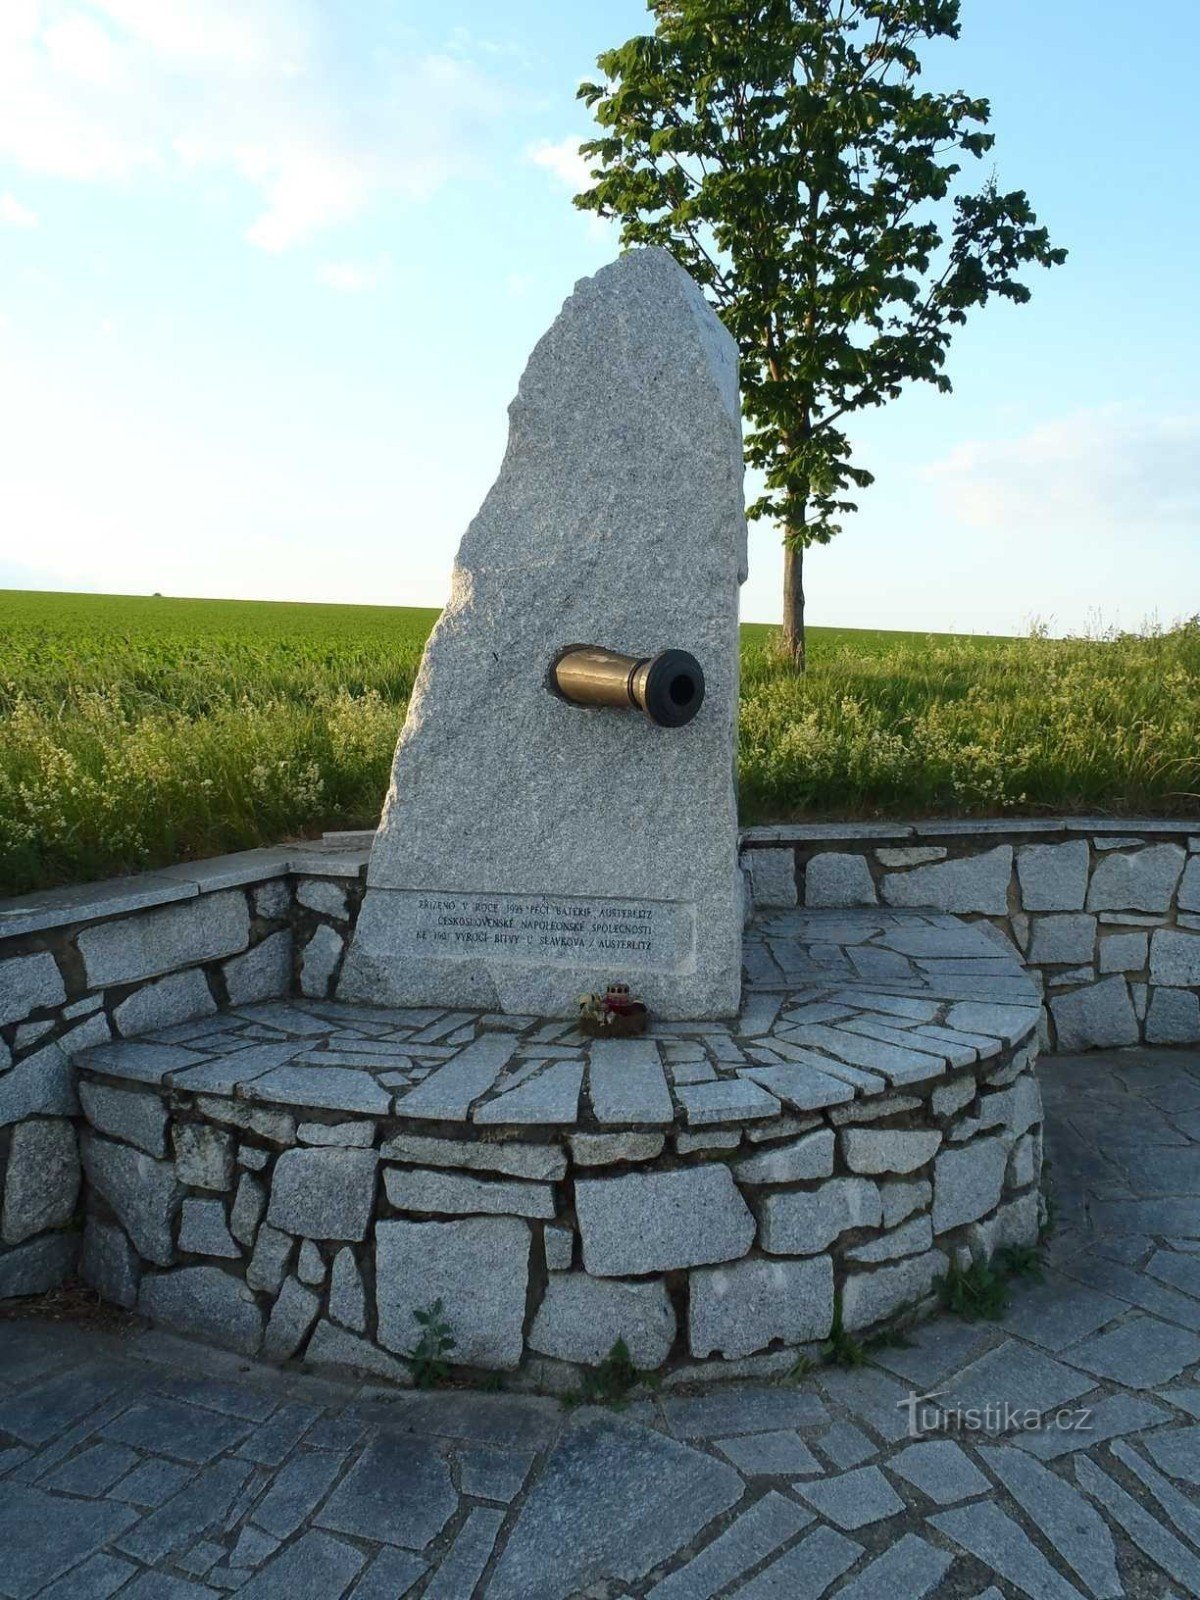 Monument to Austrian artillerymen - 25.5.2012/XNUMX/XNUMX